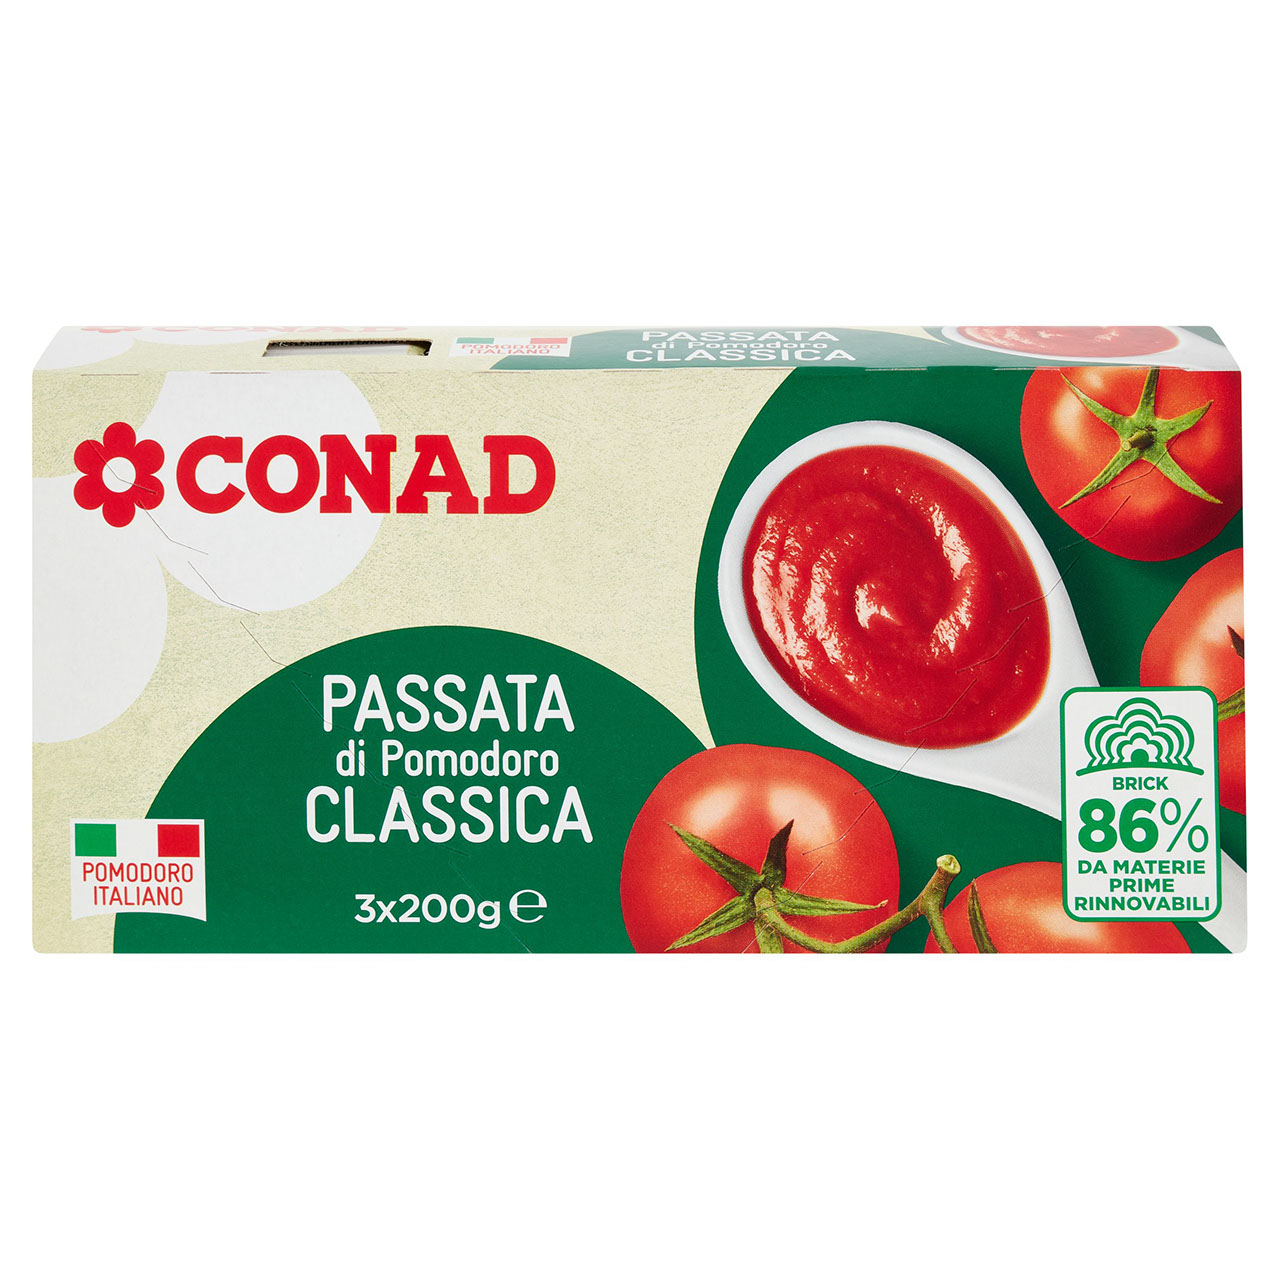 Passata di Pomodoro Classica Conad online